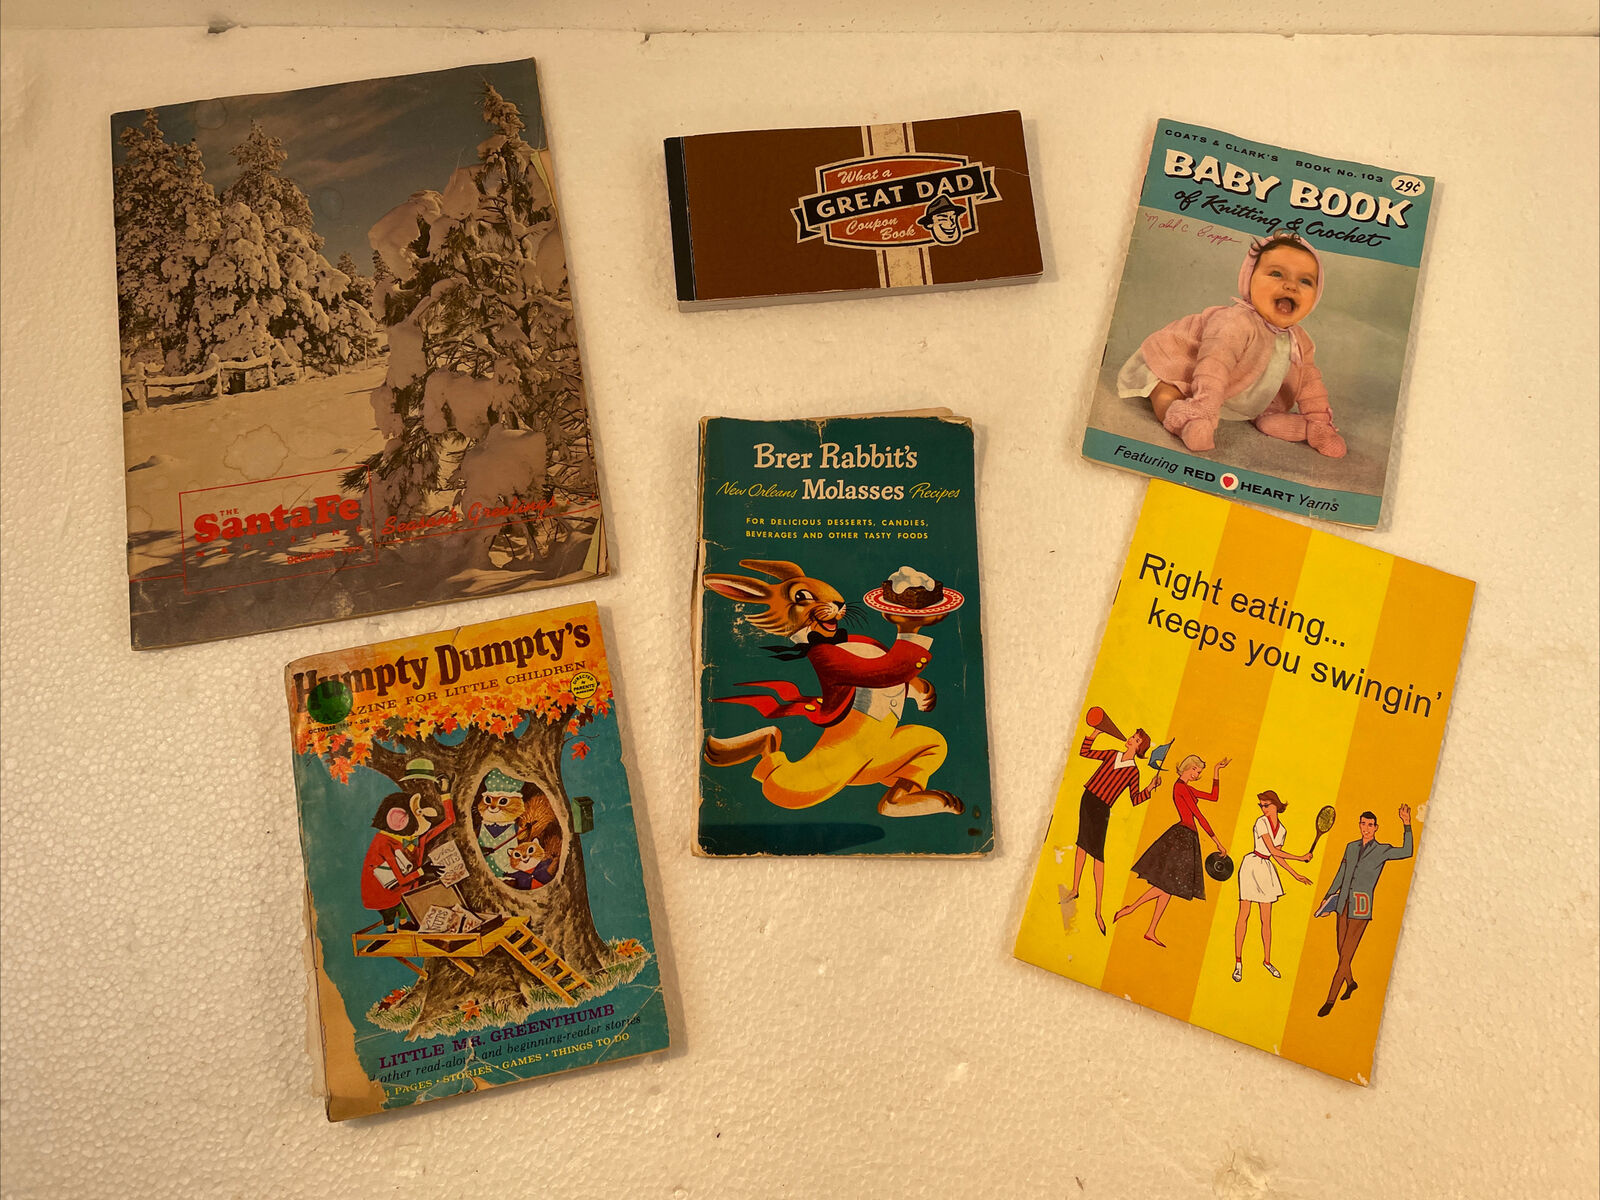 Brer Rabbit\'s New Orleans Molasses Recipes Booklet 1948 + 1960s-70s Ephemera